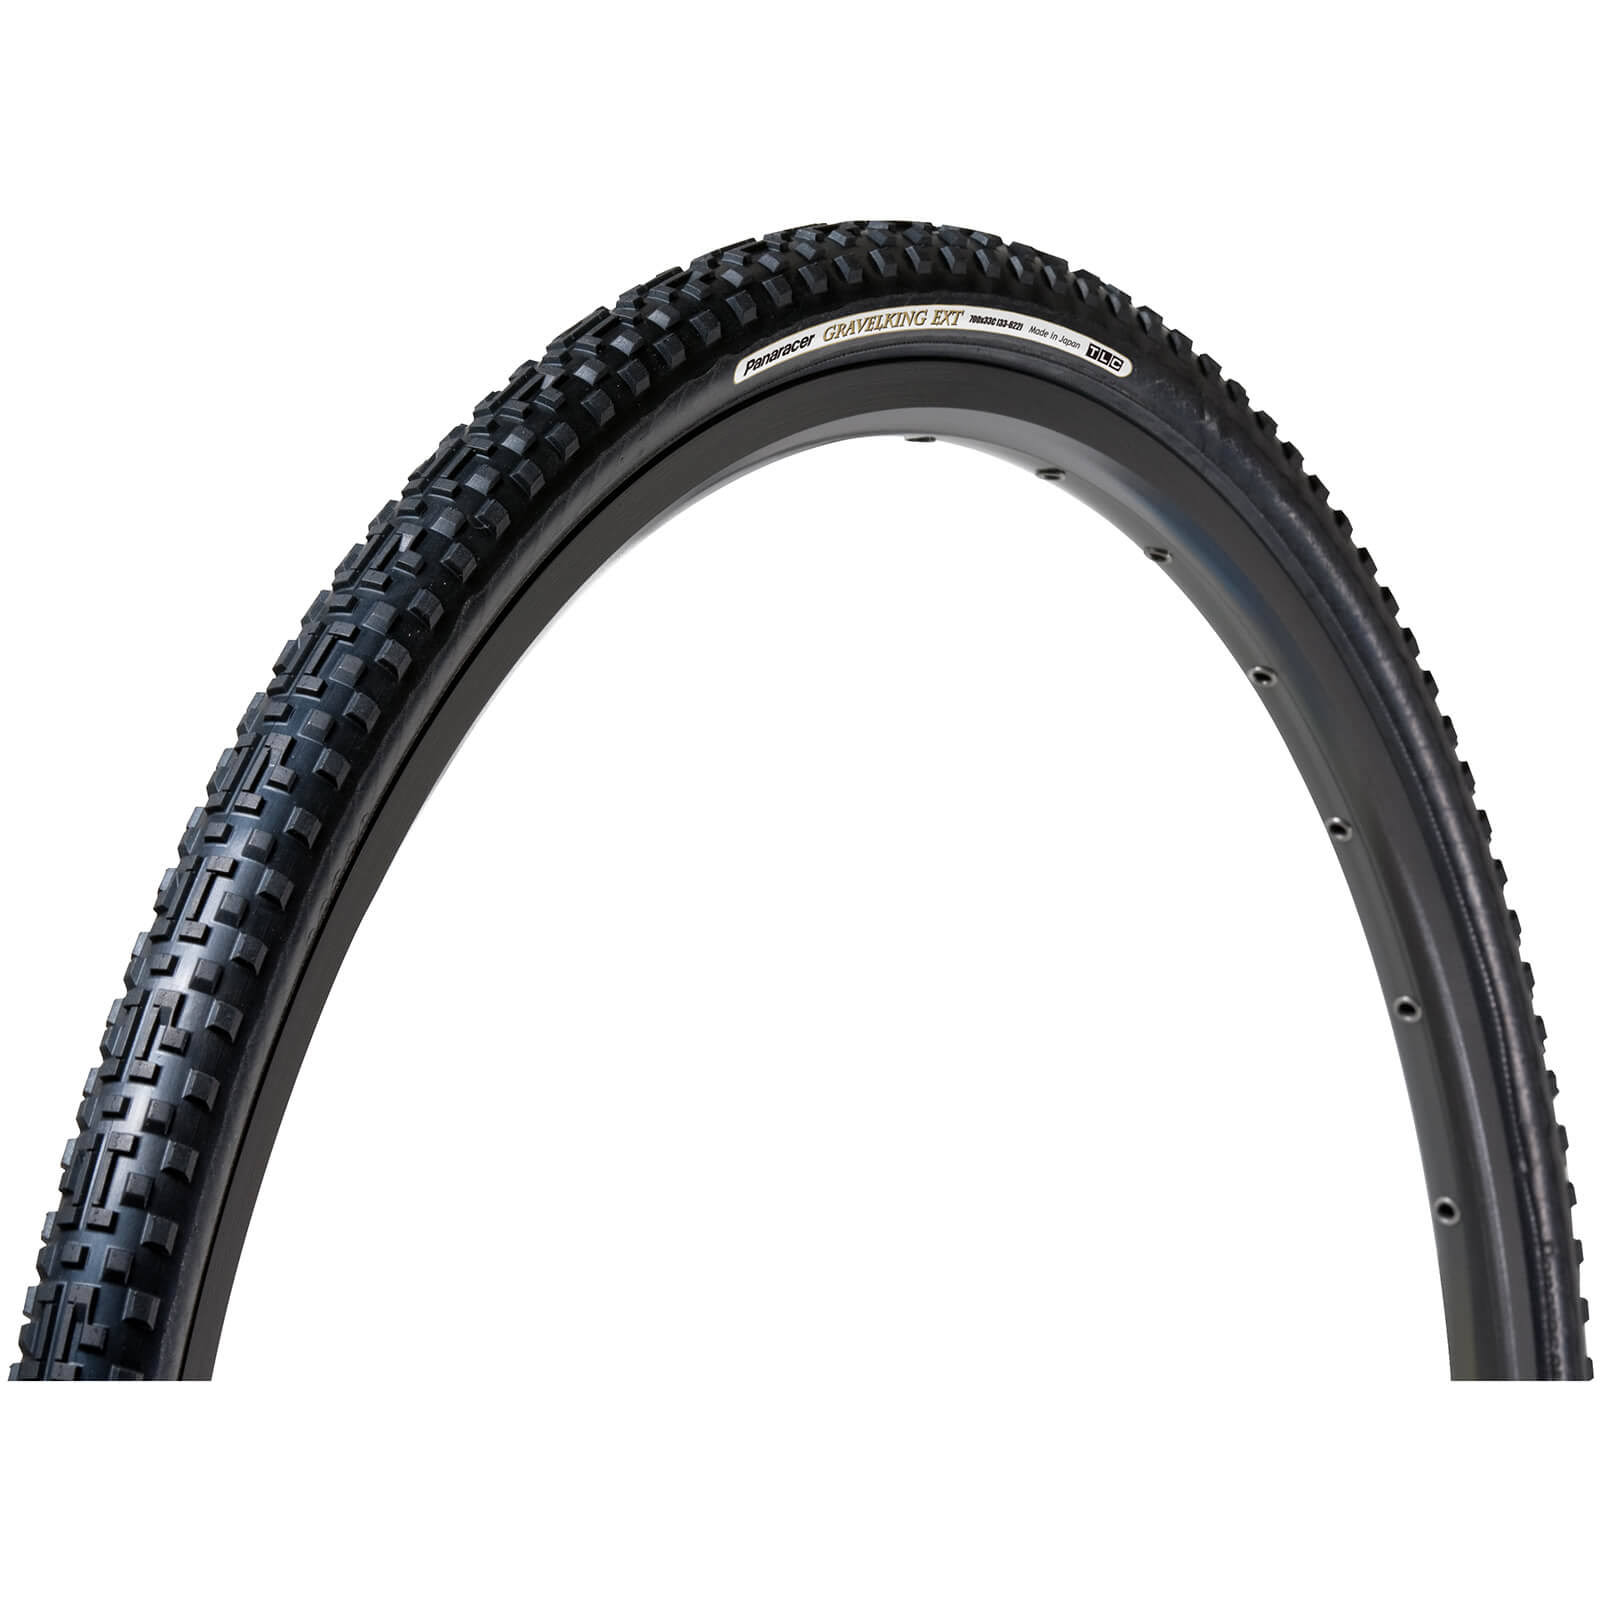 Panaracer Gravelking Ext TLC Folding Tyre - Black/Black - 700x38C Size